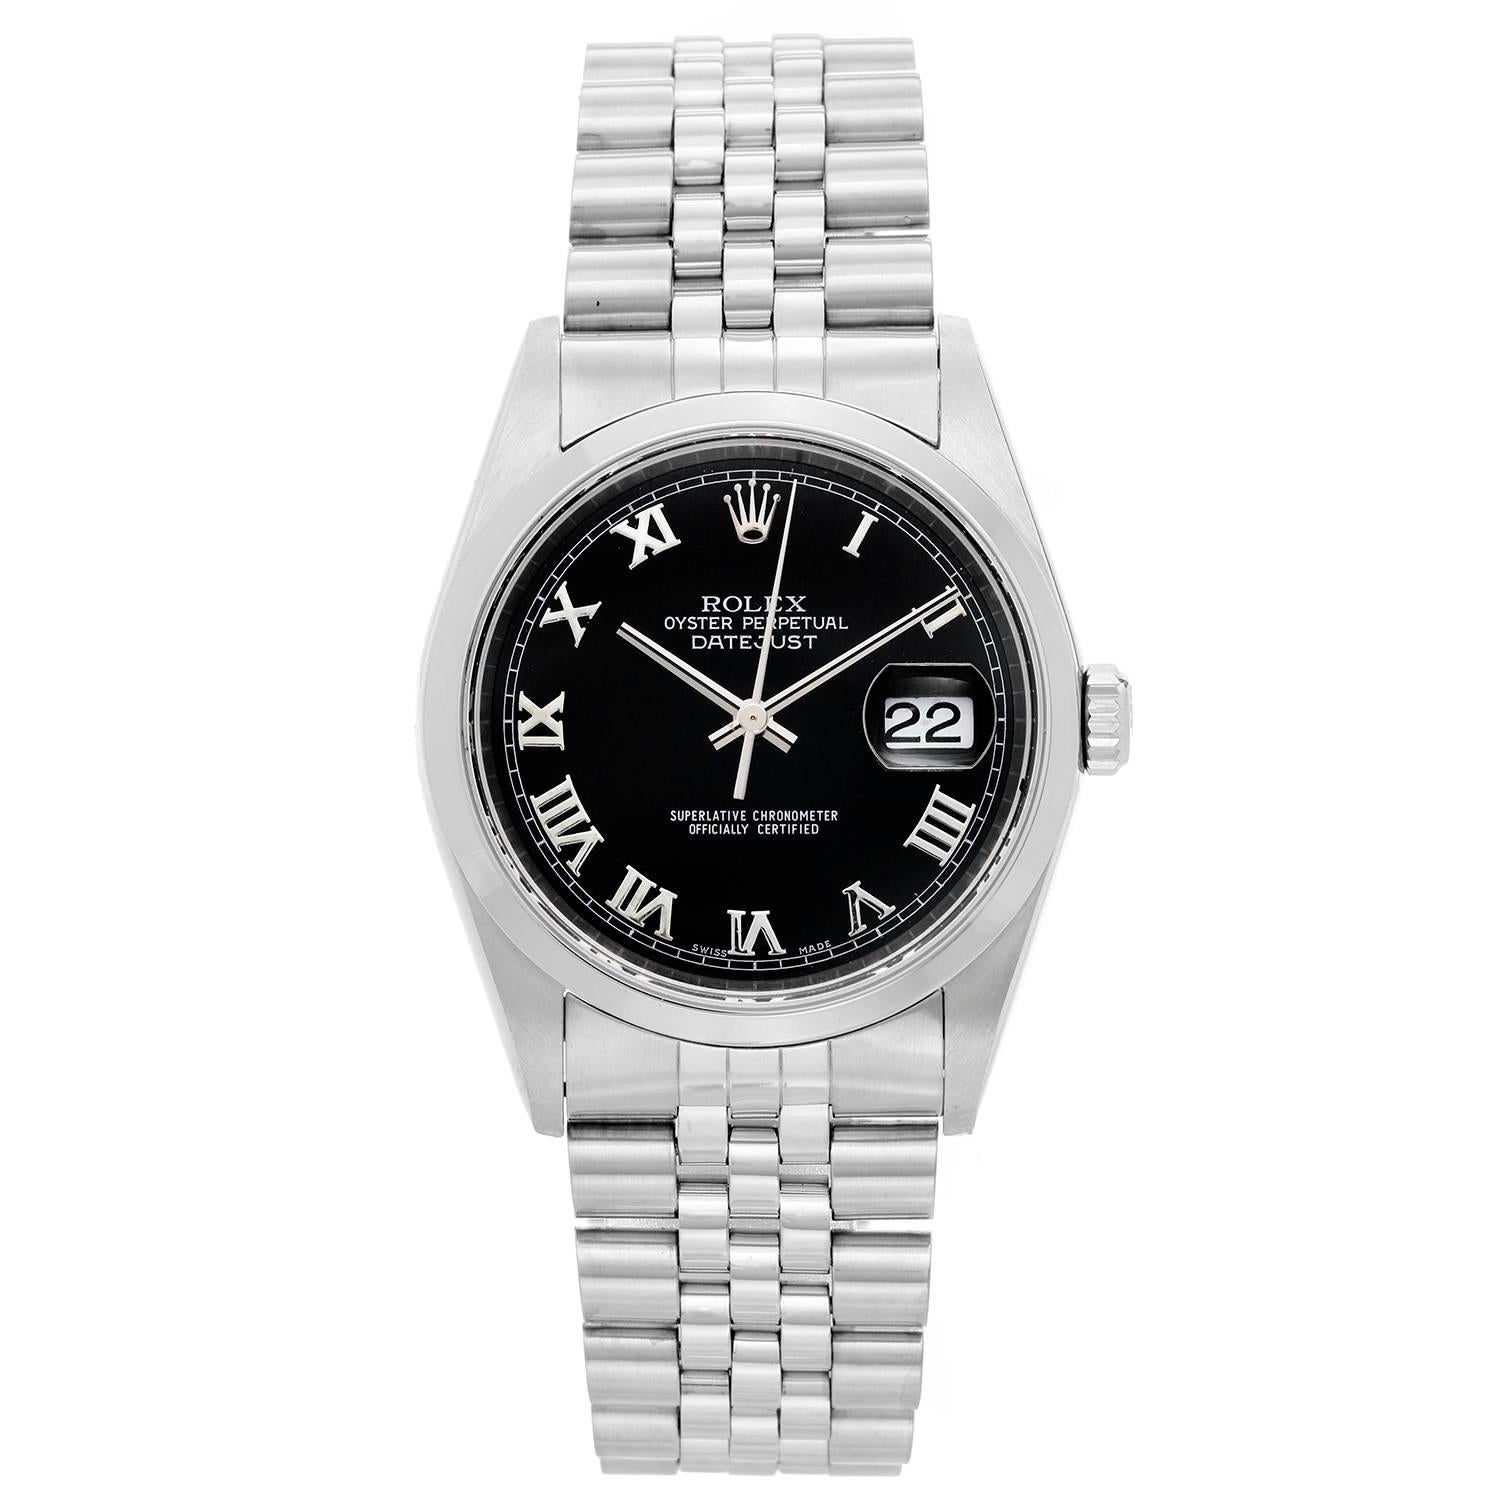 Rolex Stainless Steel Datejust Roman Numerals Automatic Wristwatch Ref 16200